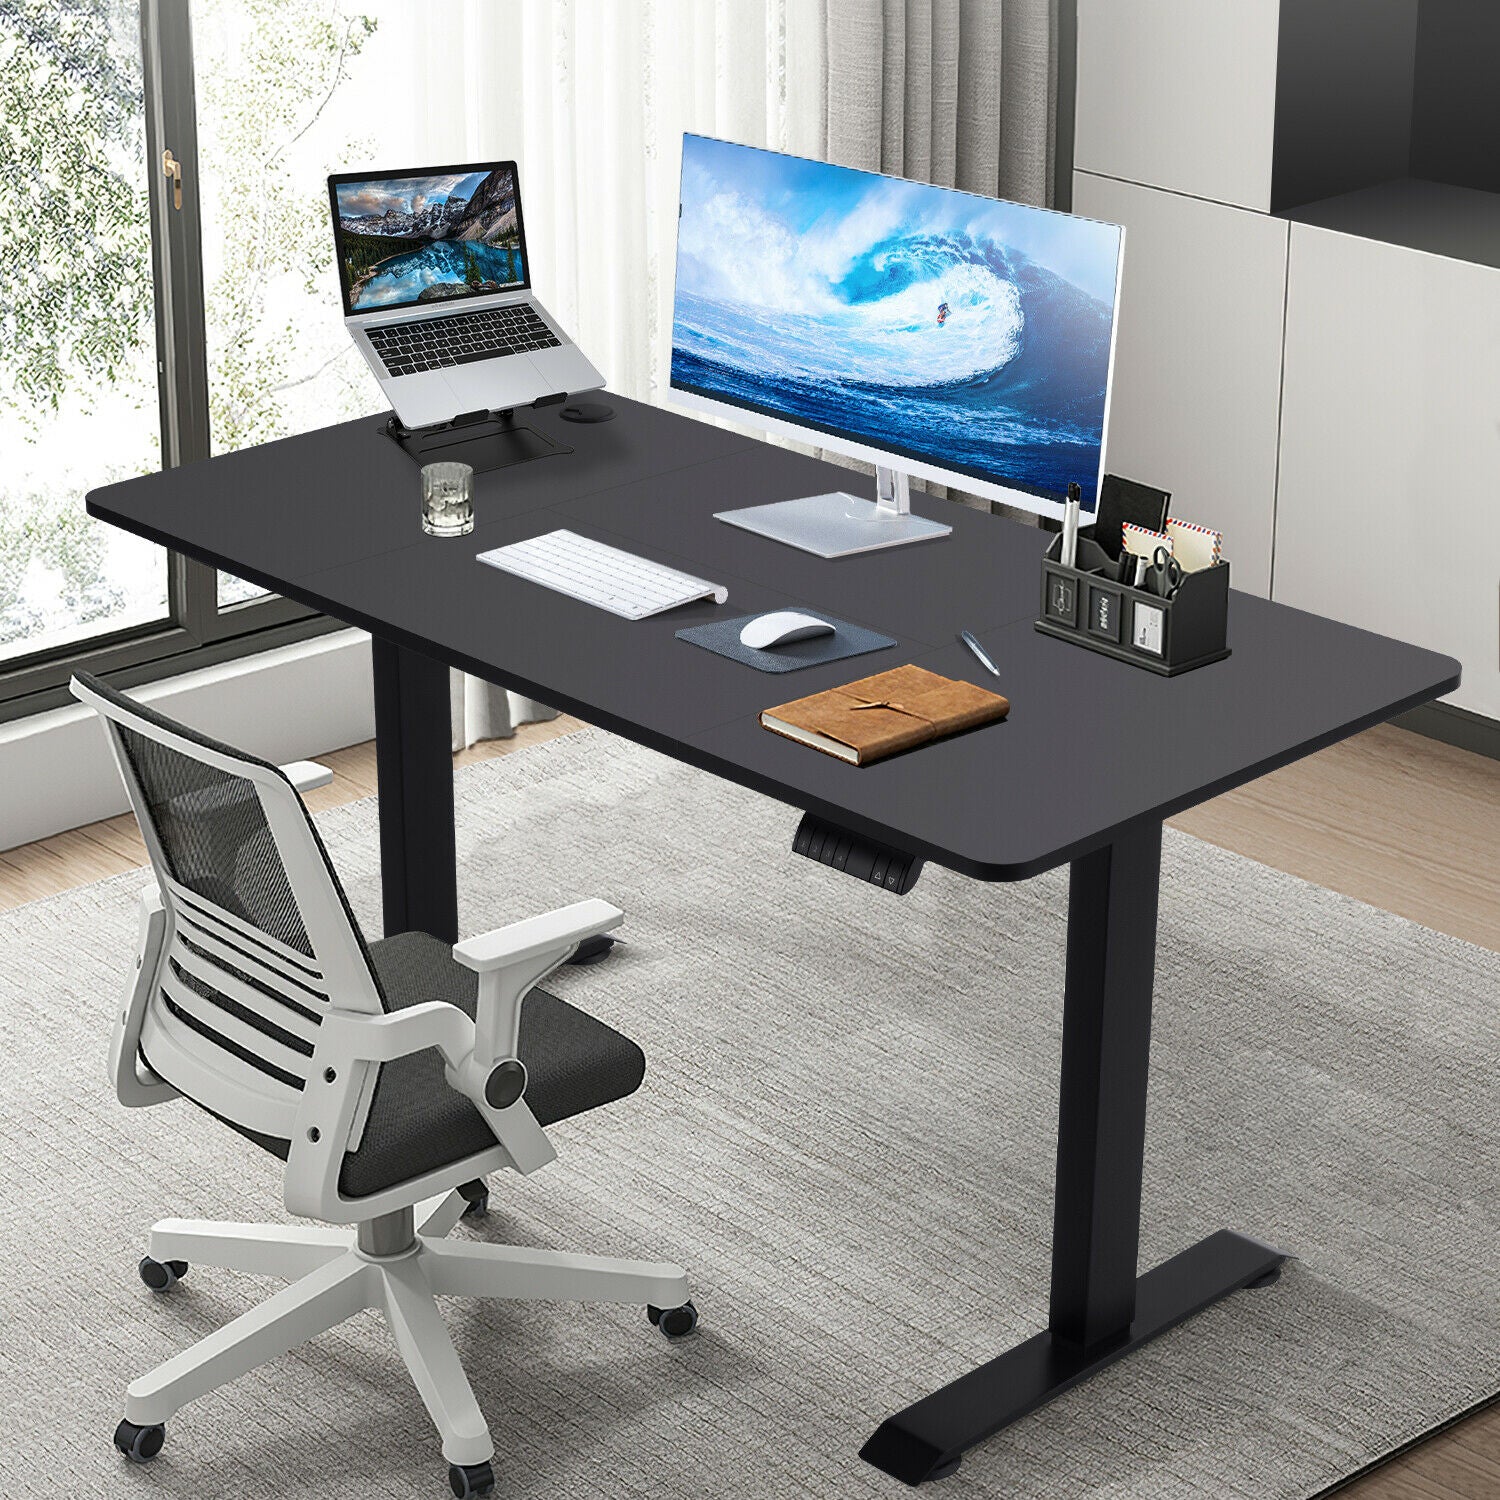 UpRight Desk: Elevate Your Productivity